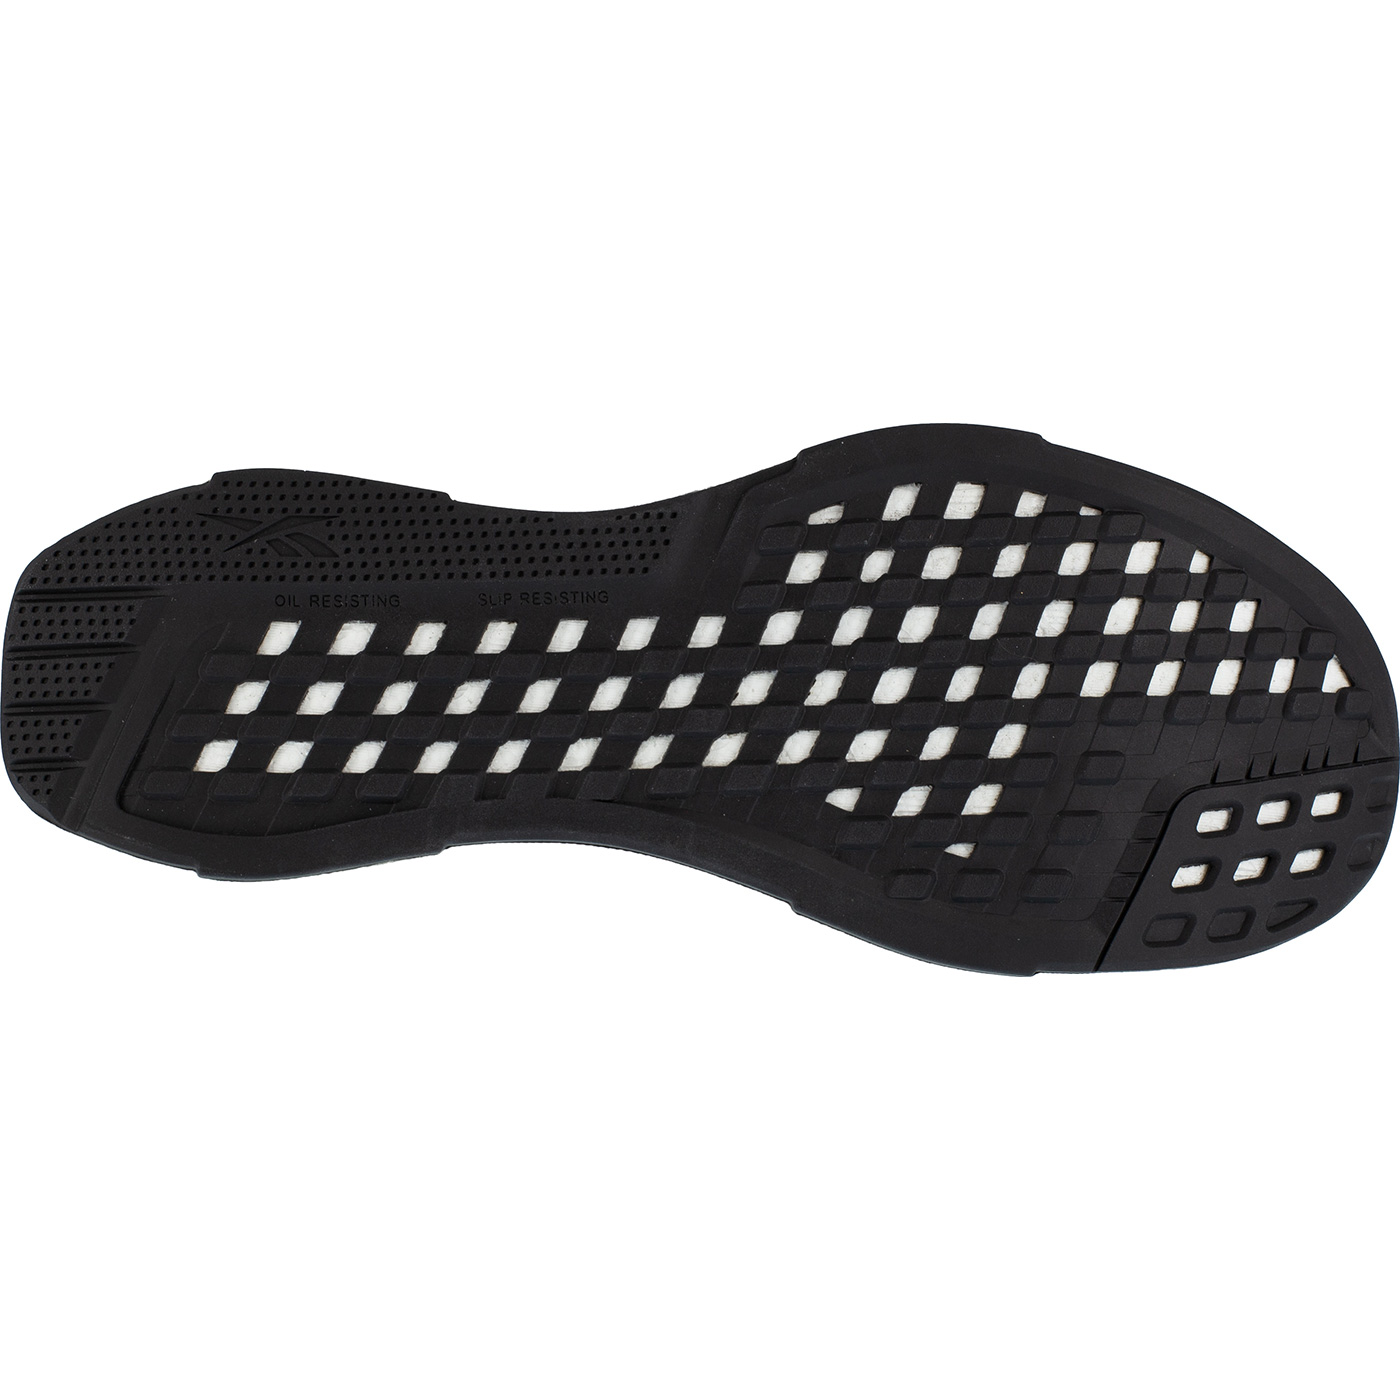 Reebok Fusion Flexweave Work Men's Composite Toe Electrical Hazard Mid-Cut Athletic Shoe Size 9.5(W) - image 2 of 4